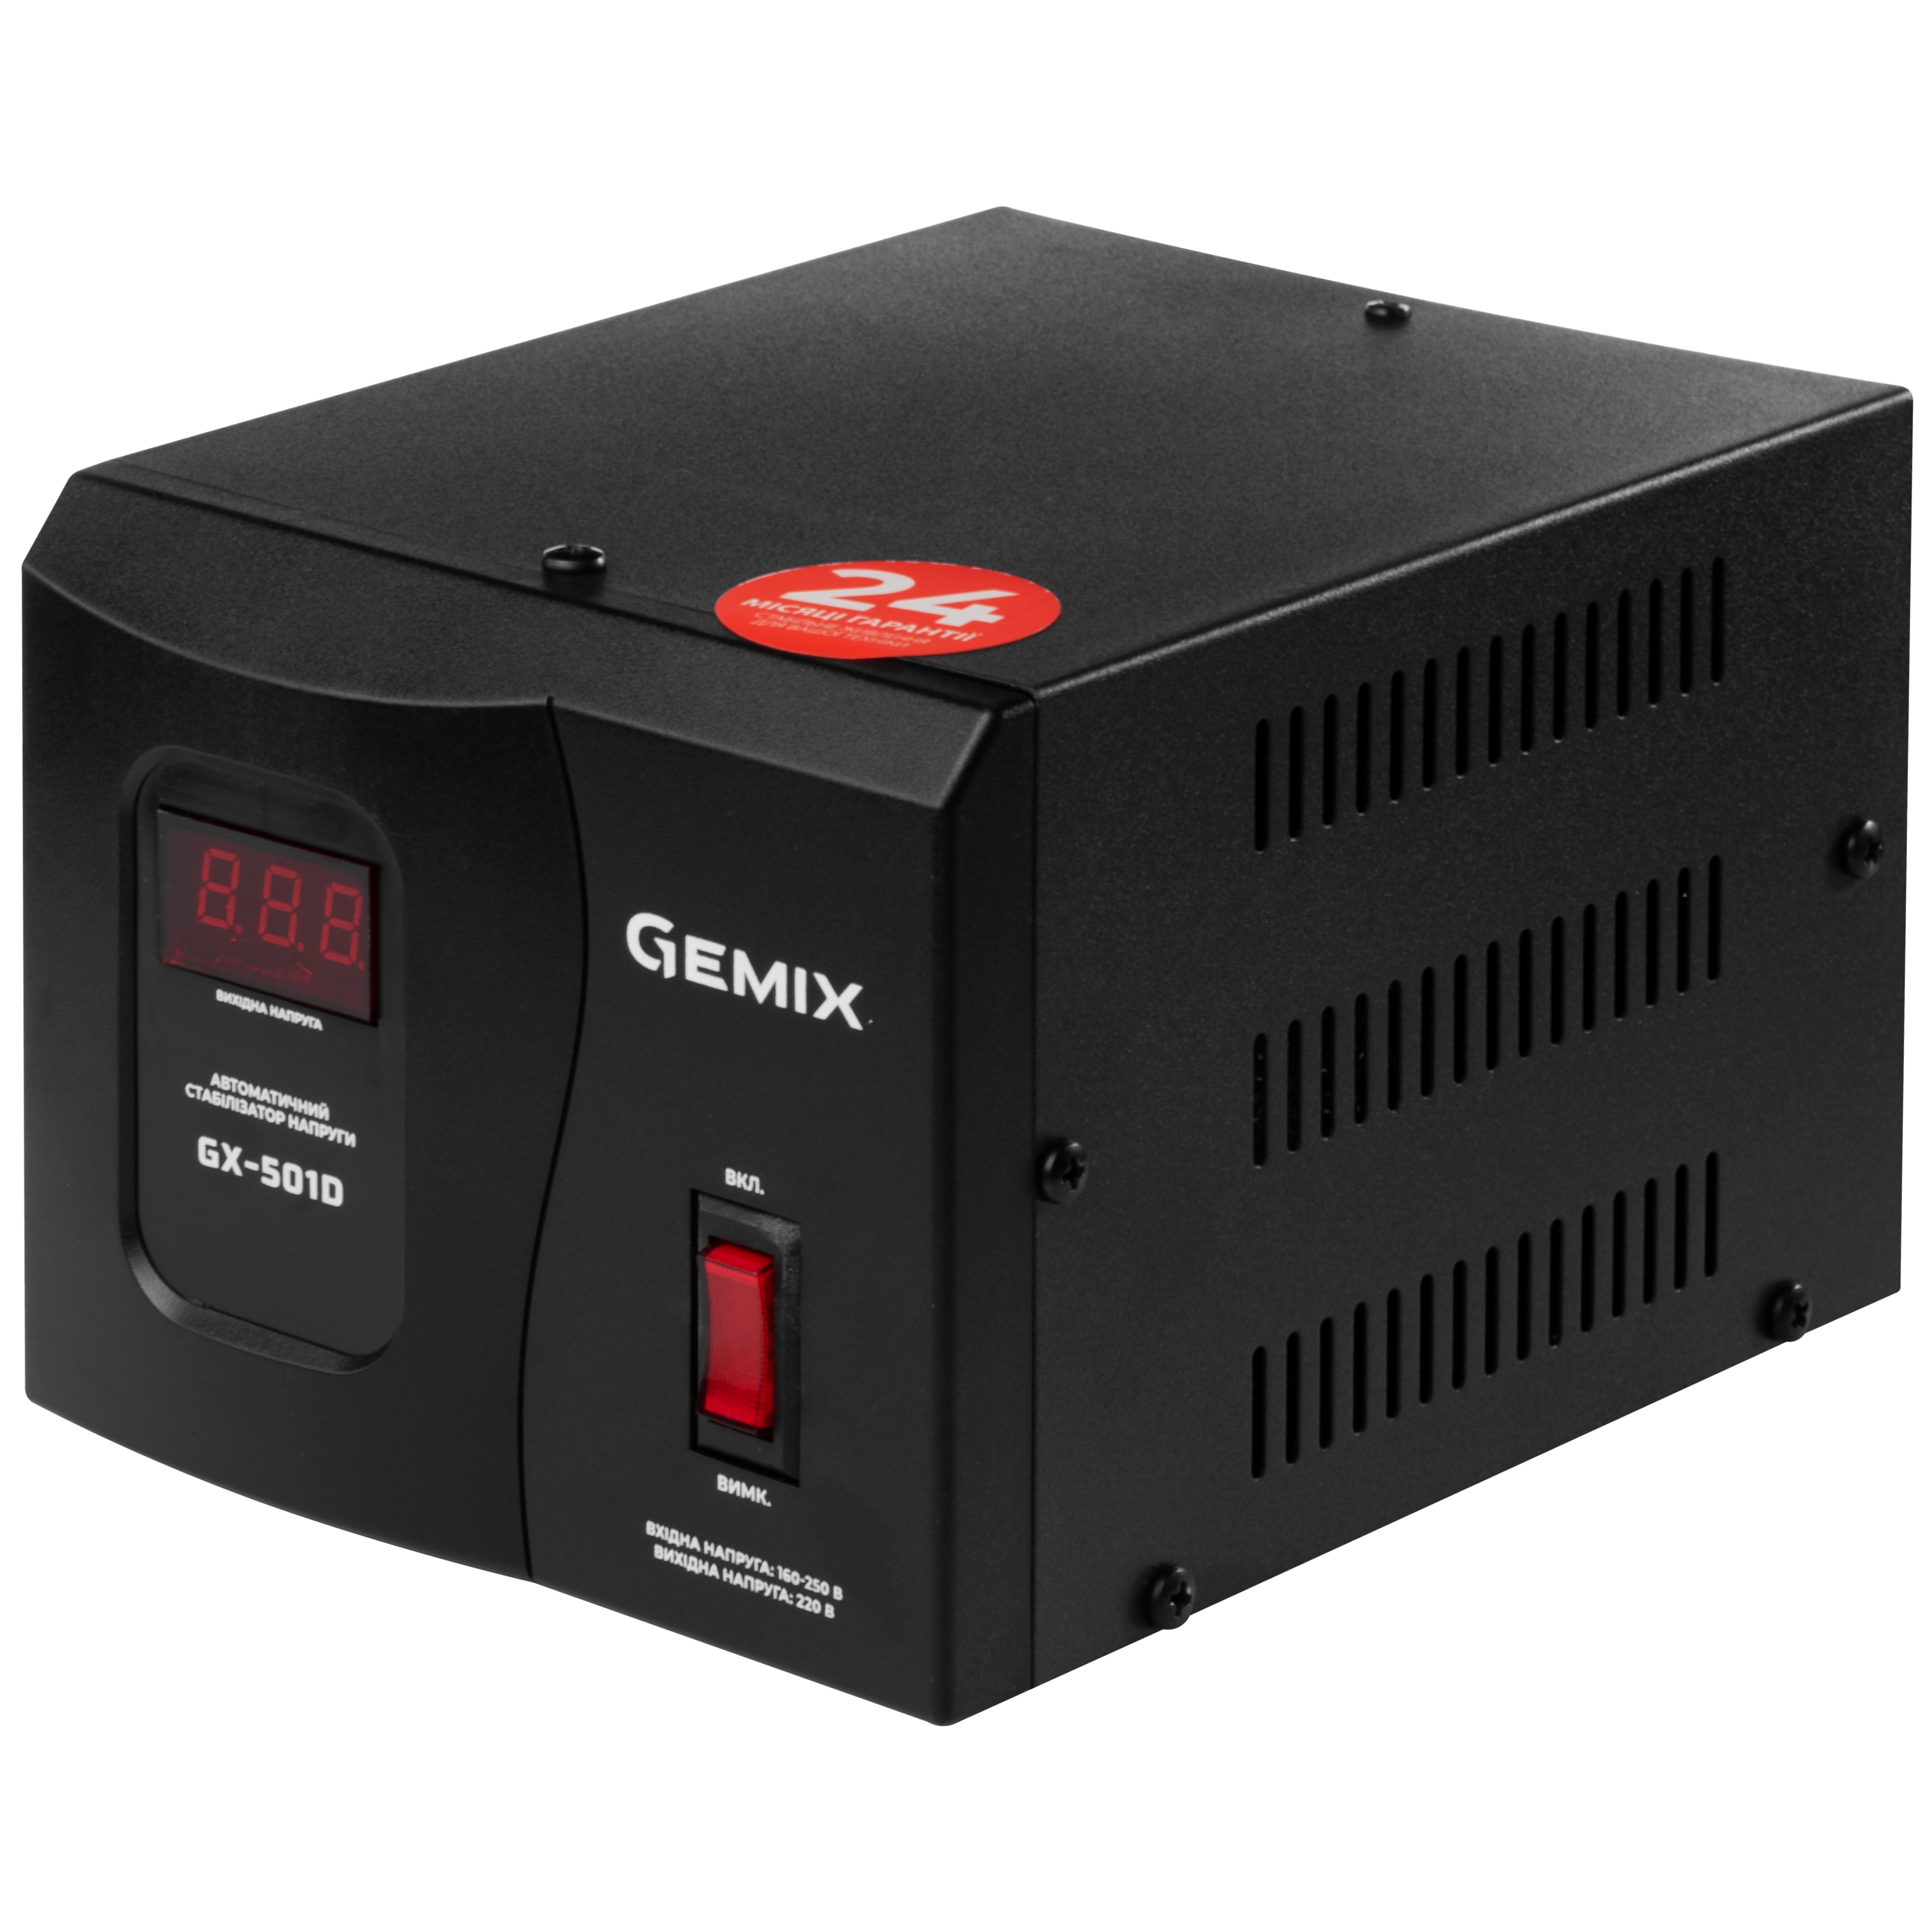 Характеристики стабилизатор напряжения Gemix GX-501D